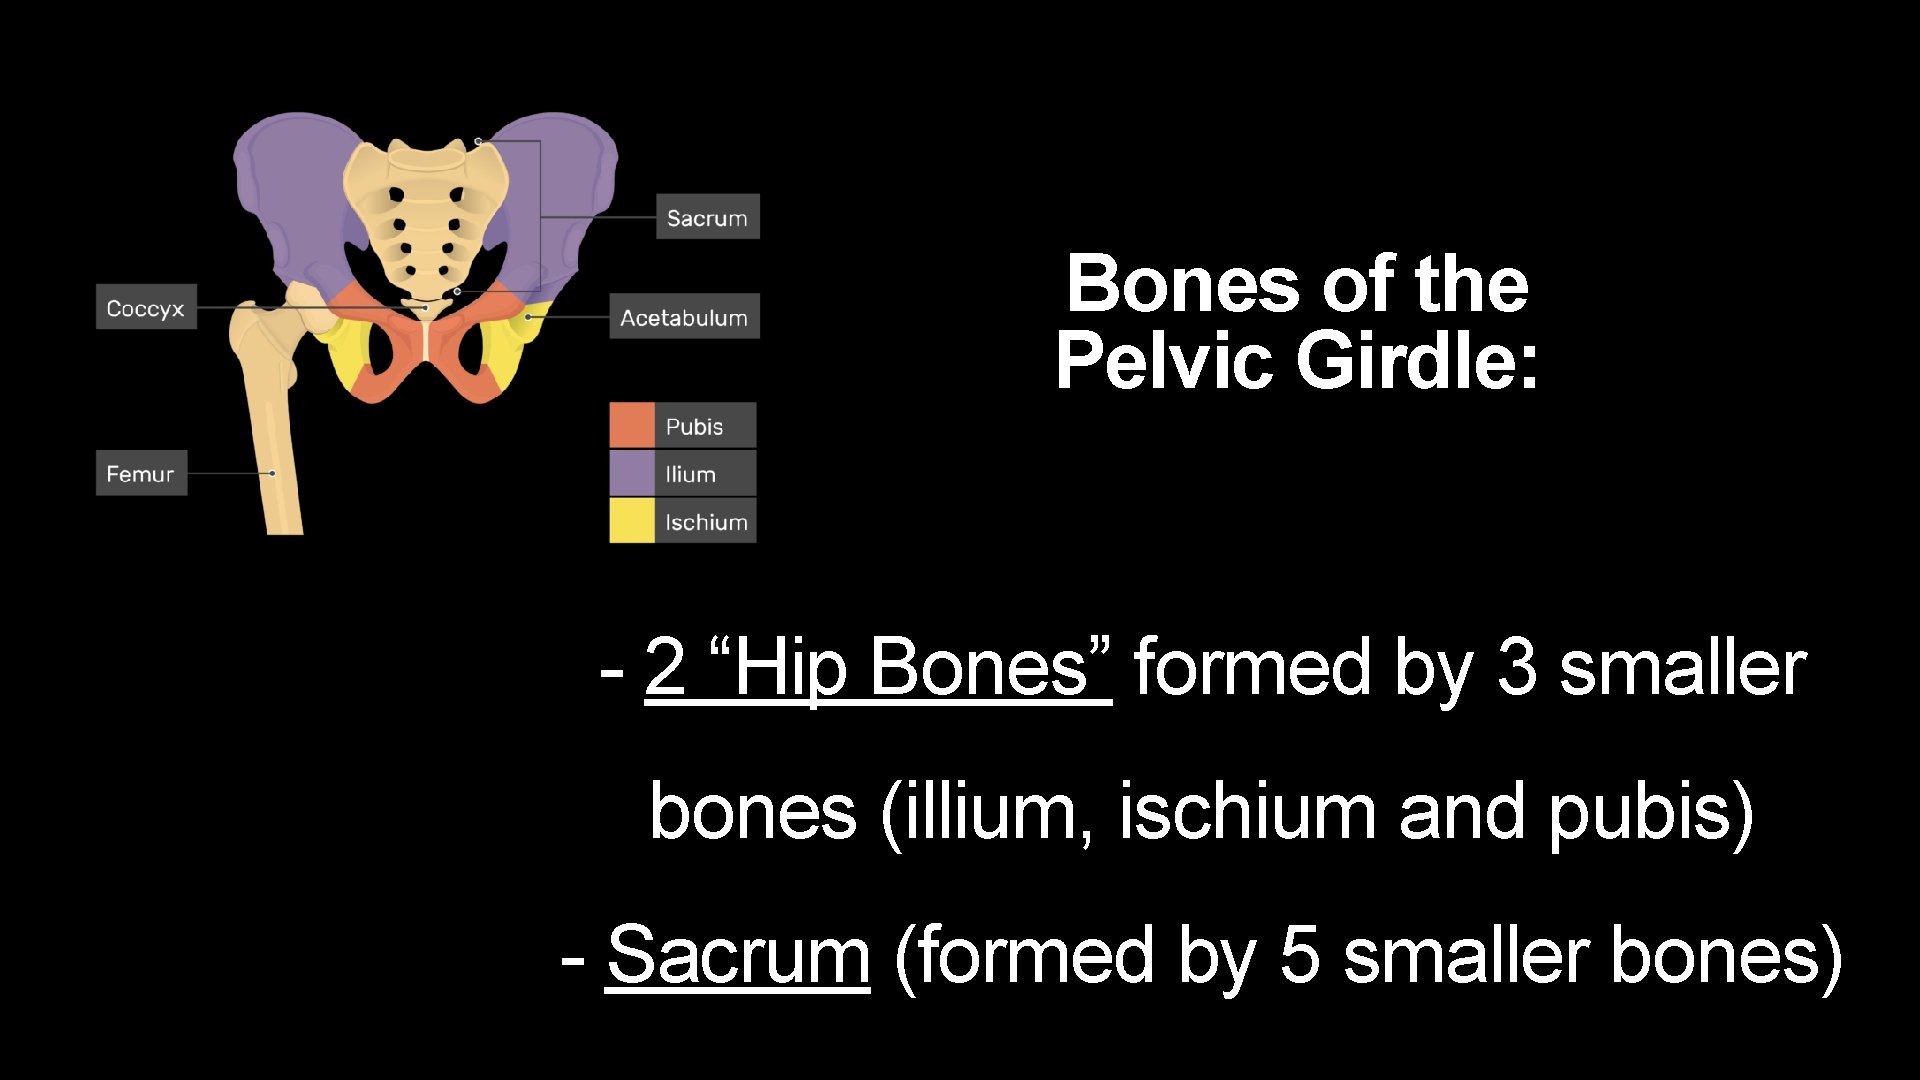 Bones of the Pelvic Girdle: - 2 “Hip Bones” formed by 3 smaller bones